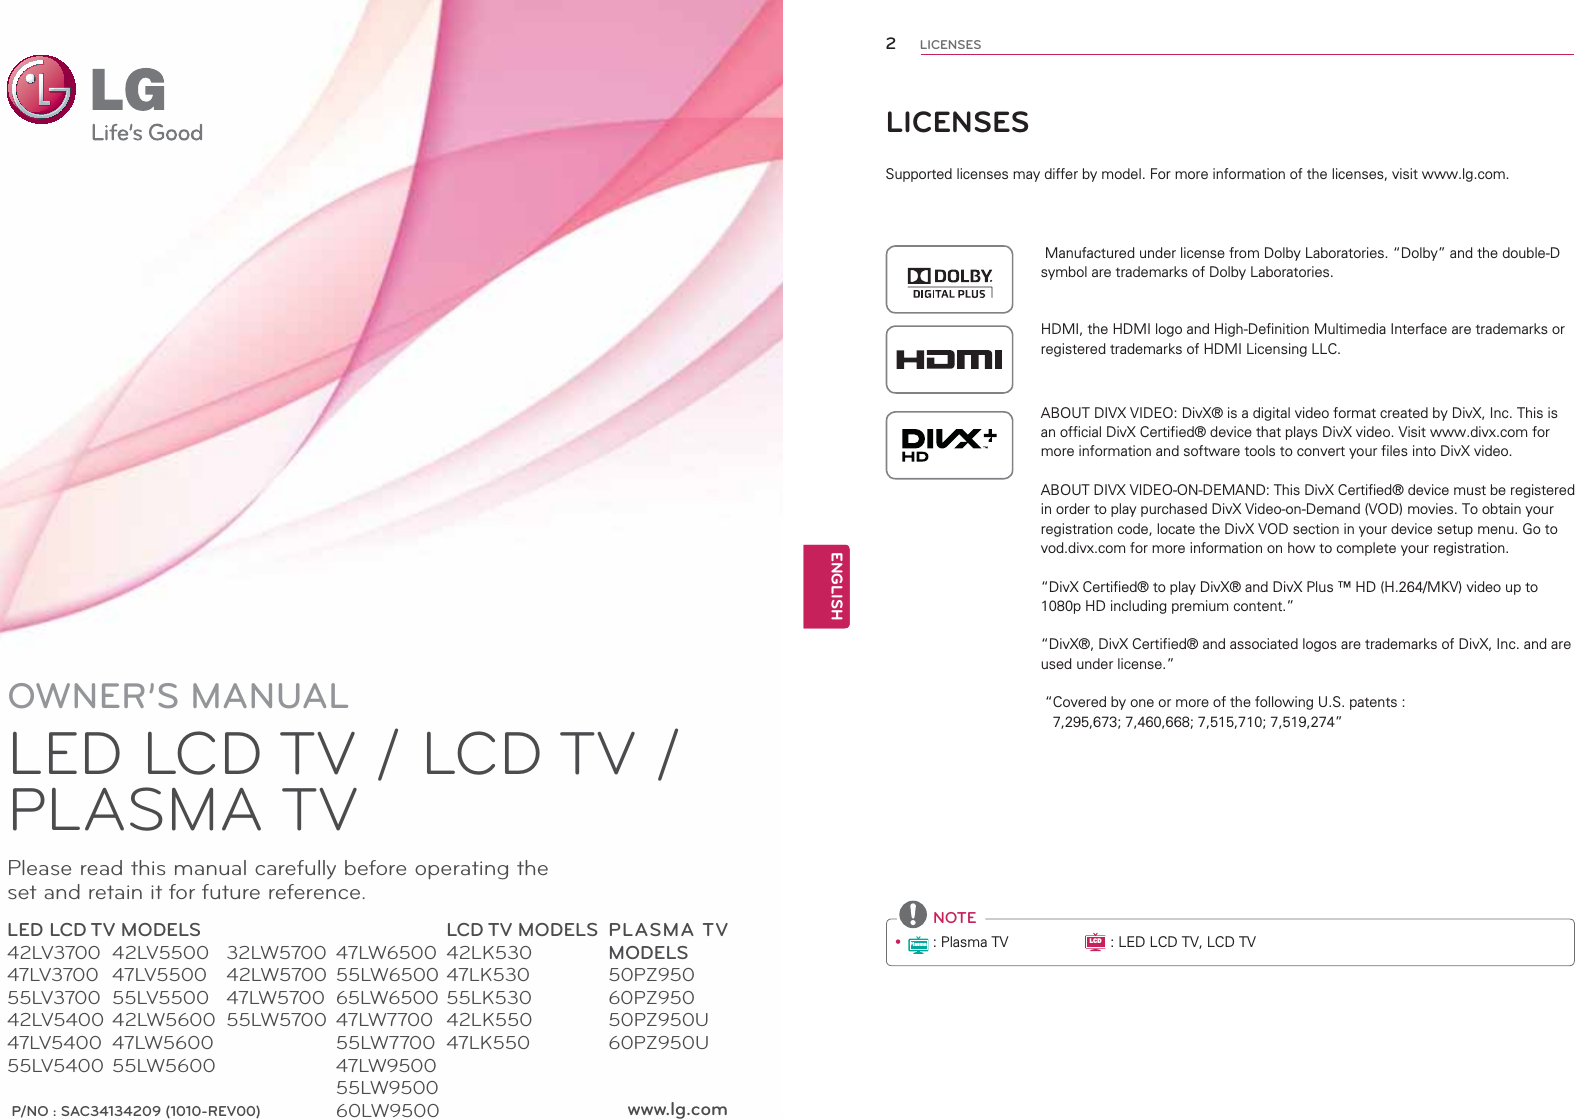 www.lg.comP/NO : SAC34134209 (1010-REV00)OWNER’S MANUALLED LCD TV / LCD TV / PLASMA TVPlease read this manual carefully before operating the set and retain it for future reference.LED LCD TV MODELS42LV370047LV370055LV370042LV540047LV540055LV5400LCD TV MODELS42LK53047LK53055LK53042LK55047LK550PLASMA TV MODELS50PZ95060PZ95050PZ950U60PZ950U42LV550047LV550055LV550042LW560047LW560055LW560032LW570042LW570047LW570055LW570047LW650055LW650065LW650047LW770055LW770047LW950055LW950060LW9500LICENSES6XSSRUWHGOLFHQVHVPD\GLIIHUE\PRGHO)RUPRUHLQIRUPDWLRQRIWKHOLFHQVHVYLVLWZZZOJFRP0DQXIDFWXUHGXQGHUOLFHQVHIURP&apos;ROE\/DERUDWRULHV|&apos;ROE\}DQGWKHGRXEOH&apos;V\PERODUHWUDGHPDUNVRI&apos;ROE\/DERUDWRULHV+&apos;0,WKH+&apos;0,ORJRDQG+LJK&apos;HILQLWLRQ0XOWLPHGLD,QWHUIDFHDUHWUDGHPDUNVRUUHJLVWHUHGWUDGHPDUNVRI+&apos;0,/LFHQVLQJ//&amp;$%287&apos;,9;9,&apos;(2&apos;LY;ÌLVDGLJLWDOYLGHRIRUPDWFUHDWHGE\&apos;LY;,QF7KLVLVDQRIILFLDO&apos;LY;&amp;HUWLILHGÌGHYLFHWKDWSOD\V&apos;LY;YLGHR9LVLWZZZGLY[FRPIRUPRUHLQIRUPDWLRQDQGVRIWZDUHWRROVWRFRQYHUW\RXUILOHVLQWR&apos;LY;YLGHR$%287&apos;,9;9,&apos;(221&apos;(0$1&apos;7KLV&apos;LY;&amp;HUWLILHGÌGHYLFHPXVWEHUHJLVWHUHGLQRUGHUWRSOD\SXUFKDVHG&apos;LY;9LGHRRQ&apos;HPDQG92&apos;PRYLHV7RREWDLQ\RXUUHJLVWUDWLRQFRGHORFDWHWKH&apos;LY;92&apos;VHFWLRQLQ\RXUGHYLFHVHWXSPHQX*RWRYRGGLY[FRPIRUPRUHLQIRUPDWLRQRQKRZWRFRPSOHWH\RXUUHJLVWUDWLRQ|&apos;LY;&amp;HUWLILHGÌWRSOD\&apos;LY;ÌDQG&apos;LY;3OXVÎ+&apos;+0.9YLGHRXSWRS+&apos;LQFOXGLQJSUHPLXPFRQWHQW}|&apos;LY;Ì&apos;LY;&amp;HUWLILHGÌDQGDVVRFLDWHGORJRVDUHWUDGHPDUNVRI&apos;LY;,QFDQGDUHXVHGXQGHUOLFHQVH}|&amp;RYHUHGE\RQHRUPRUHRIWKHIROORZLQJ86SDWHQWV} NOTEyPlasma3ODVPD79LCD/(&apos;/&amp;&apos;79/&amp;&apos;792ENGENGLISHLICENSES